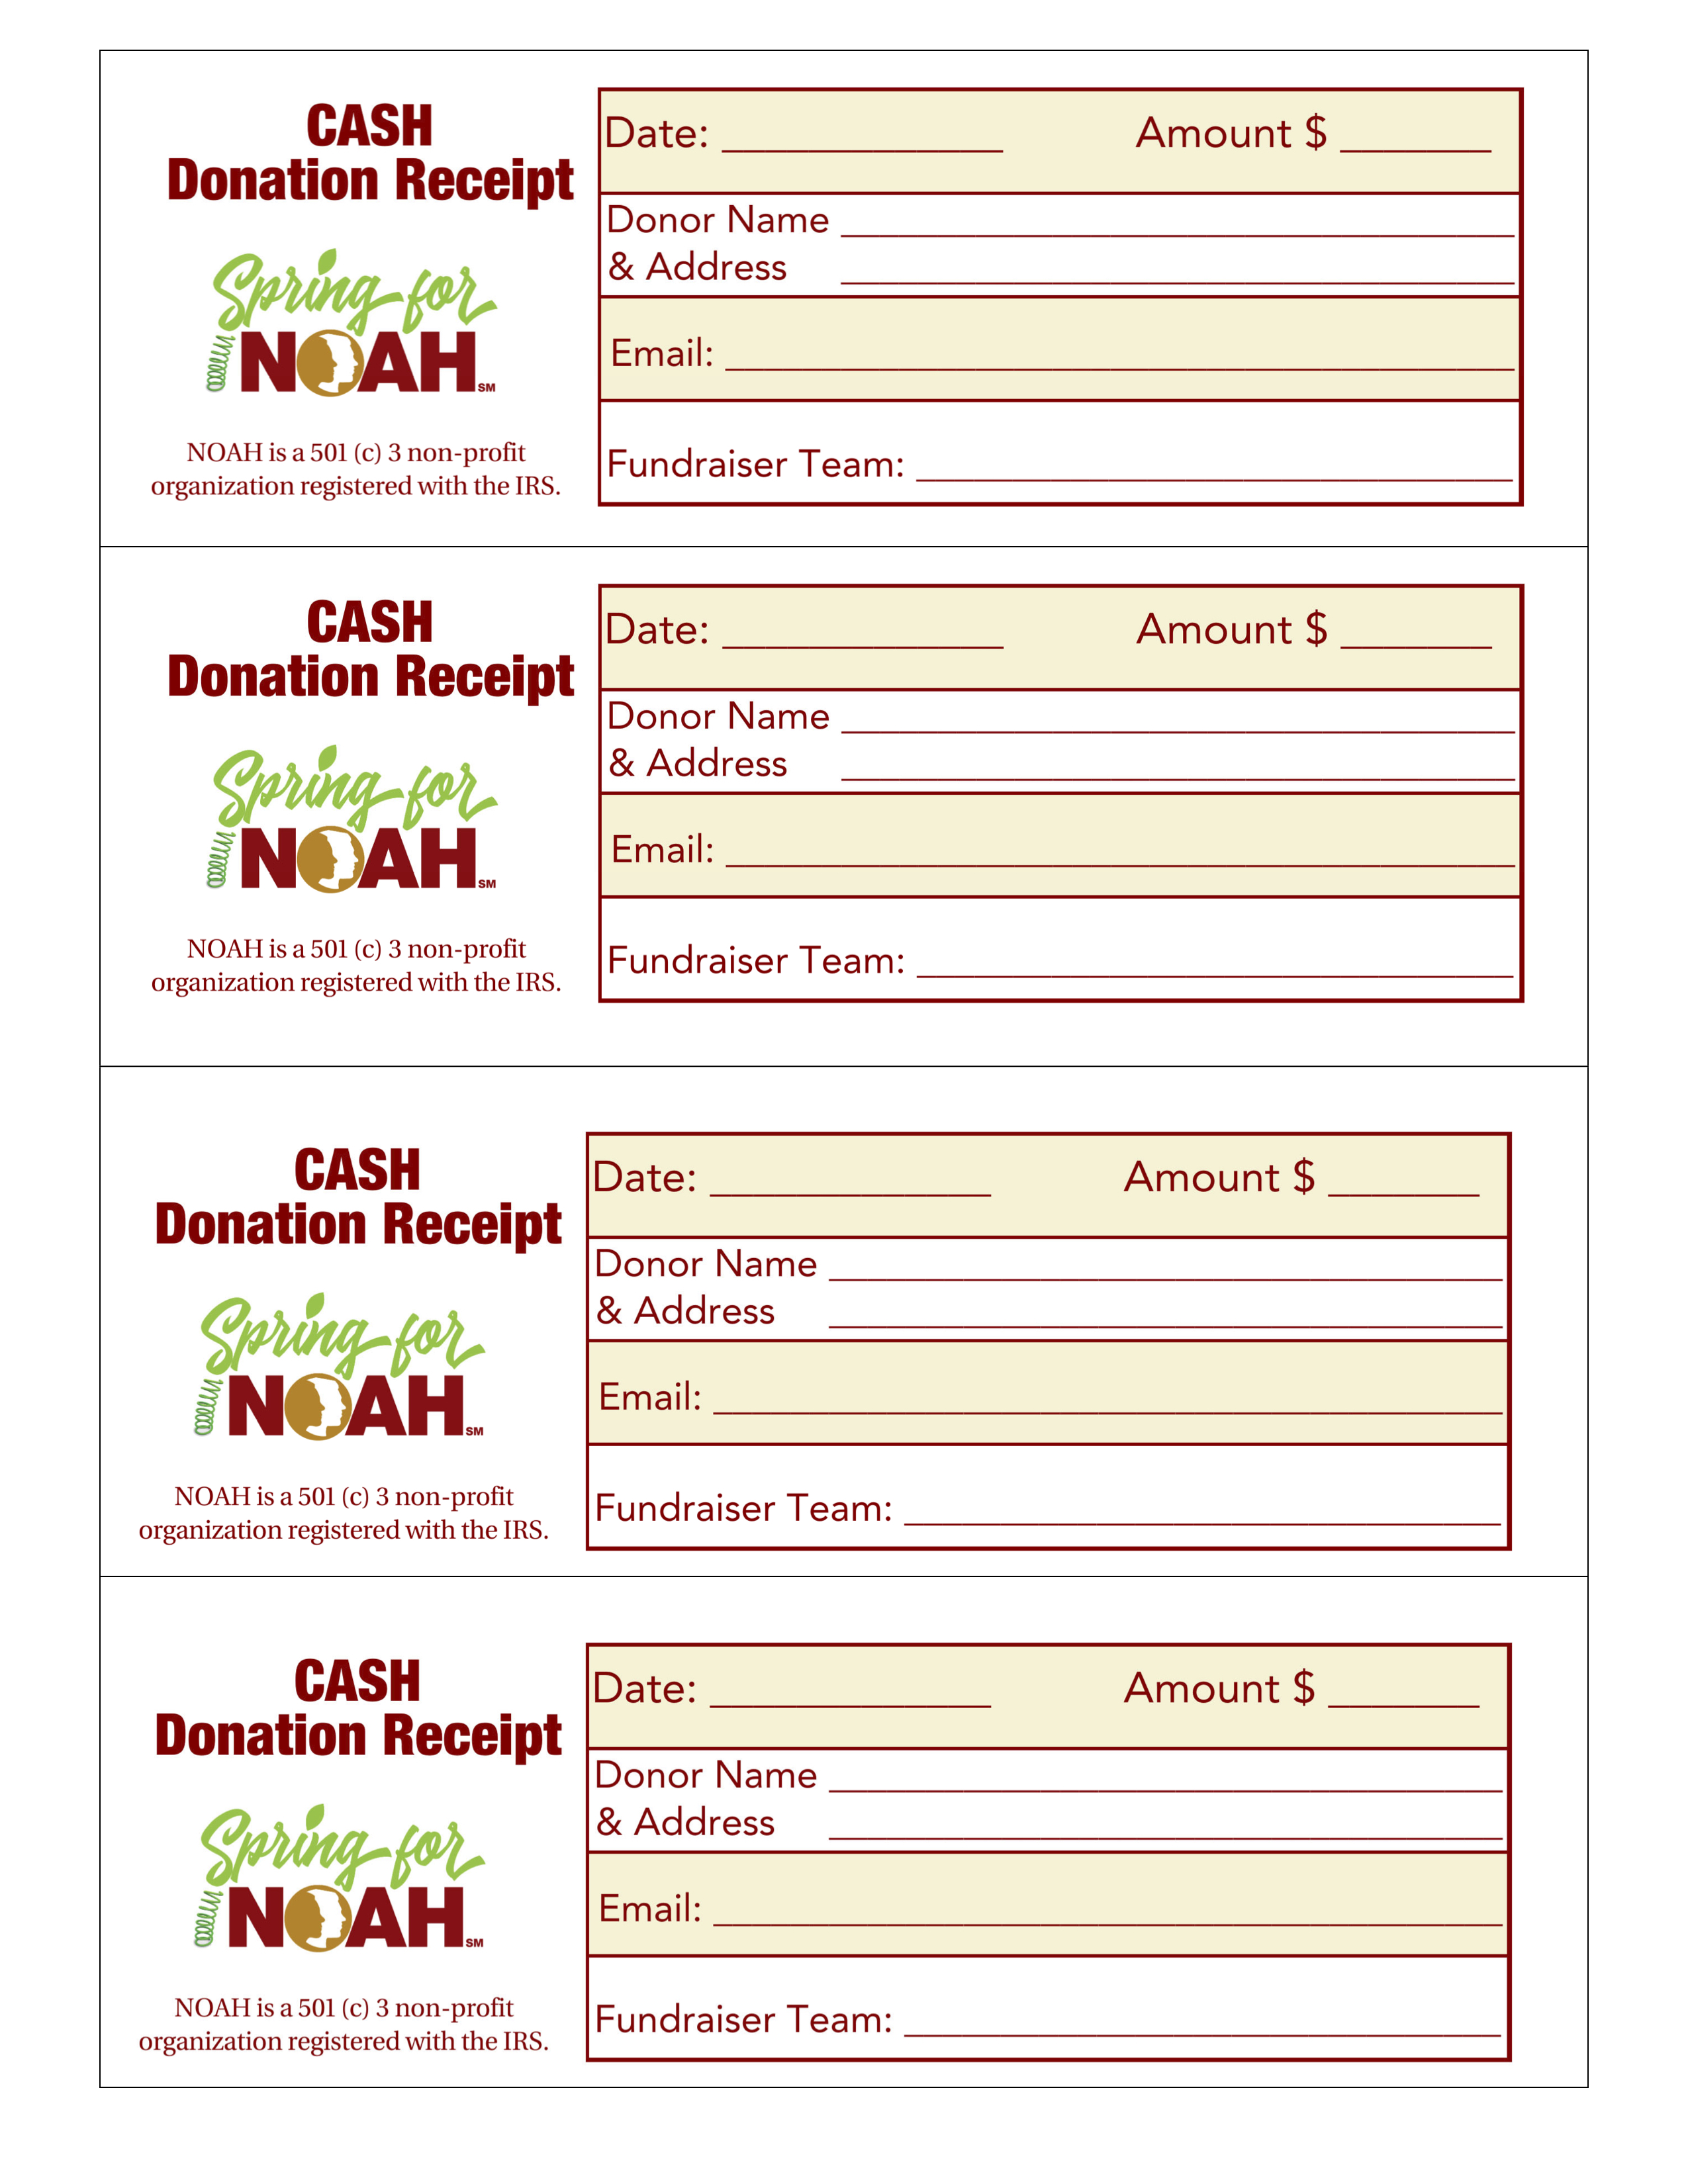 Spring for NOAH Fundraiser Cash Donation Receipt